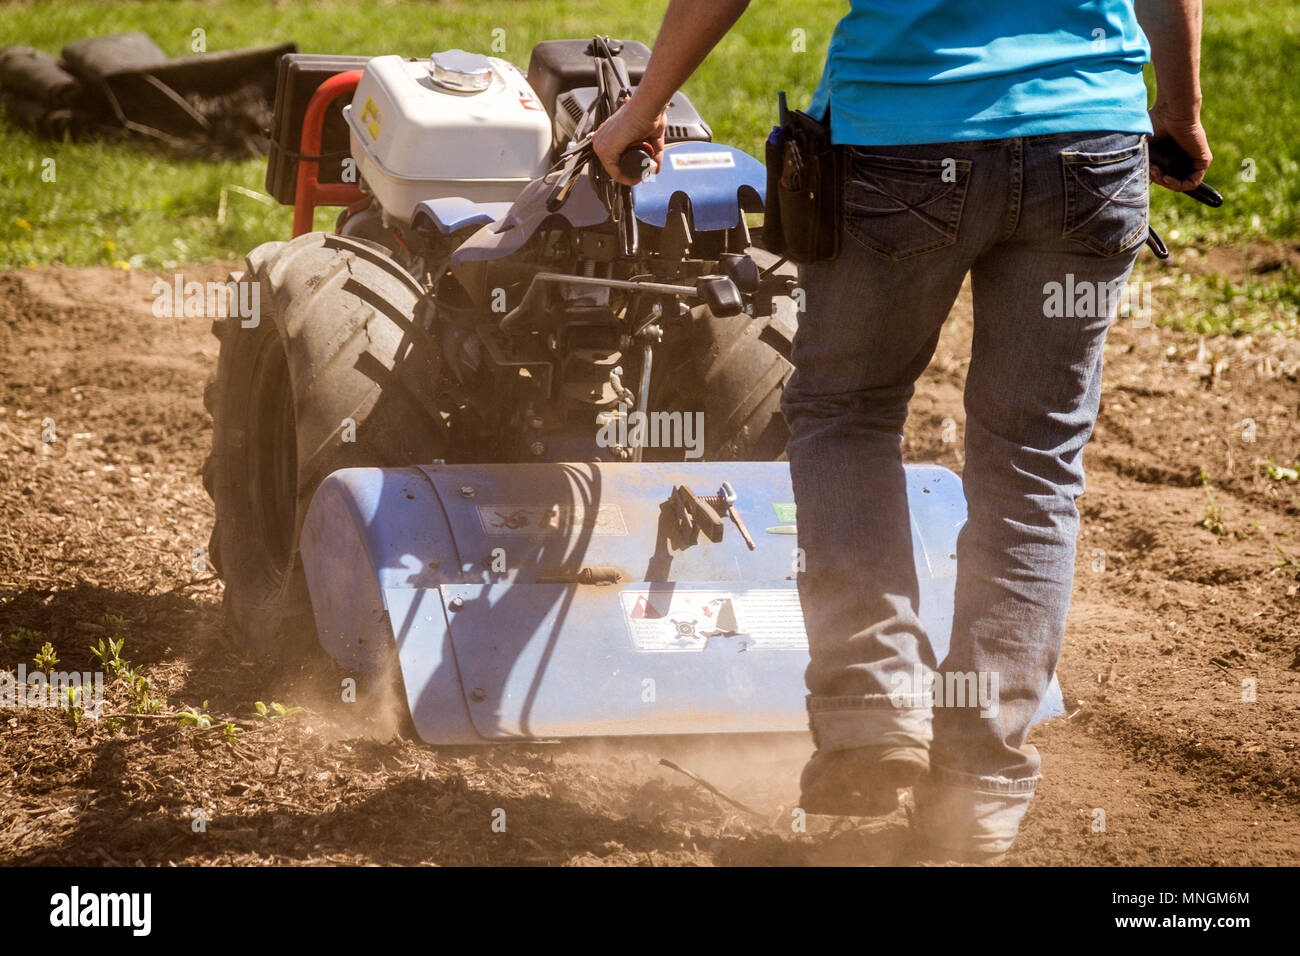 Woman worker driving rototiller tractor unit preparing soil on outdoor garden Stock Photo